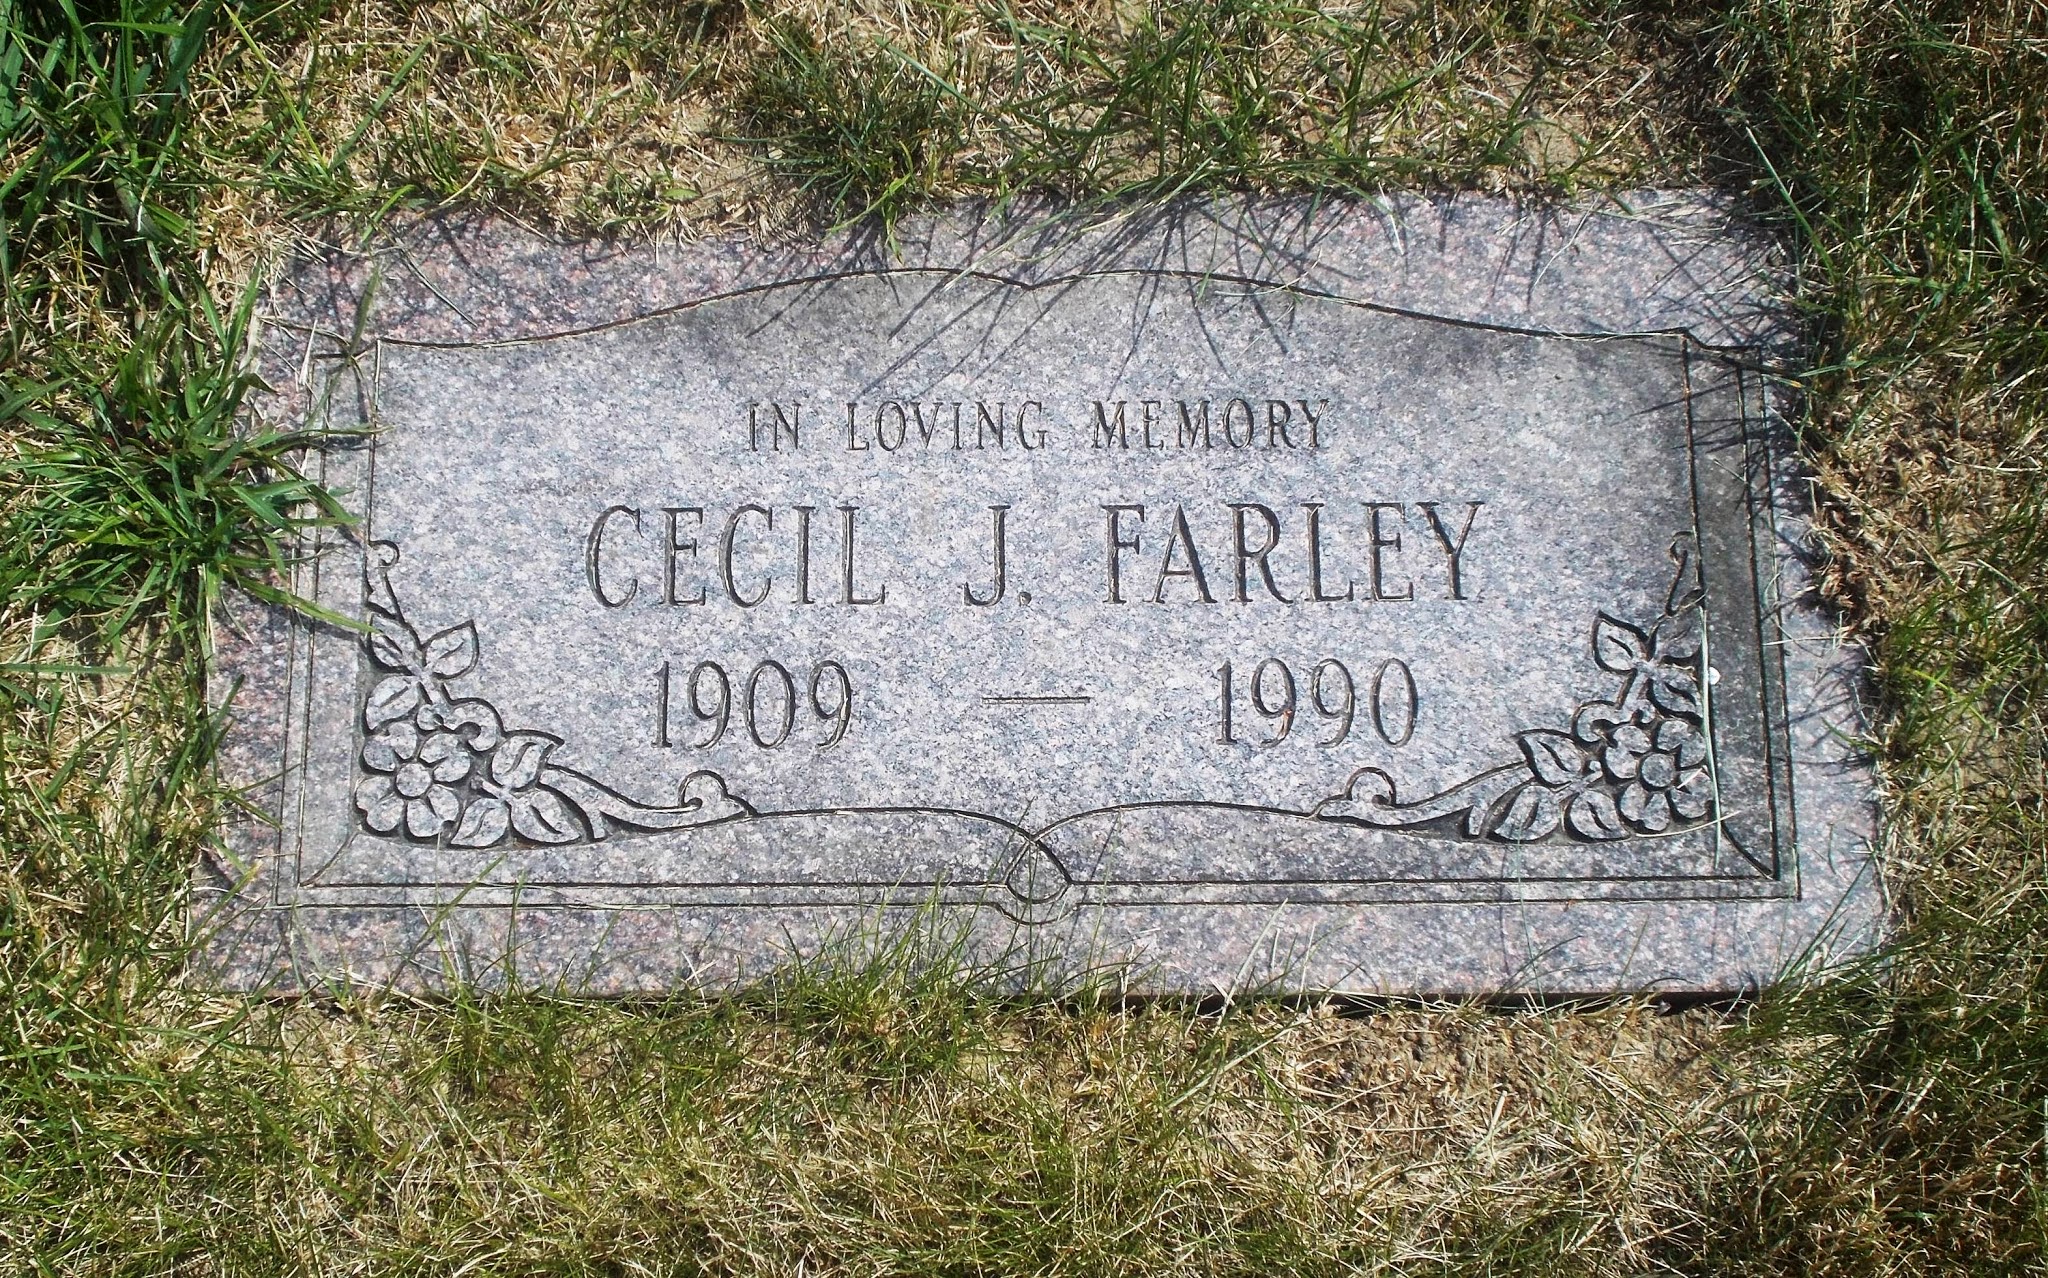 Cecil J Farley